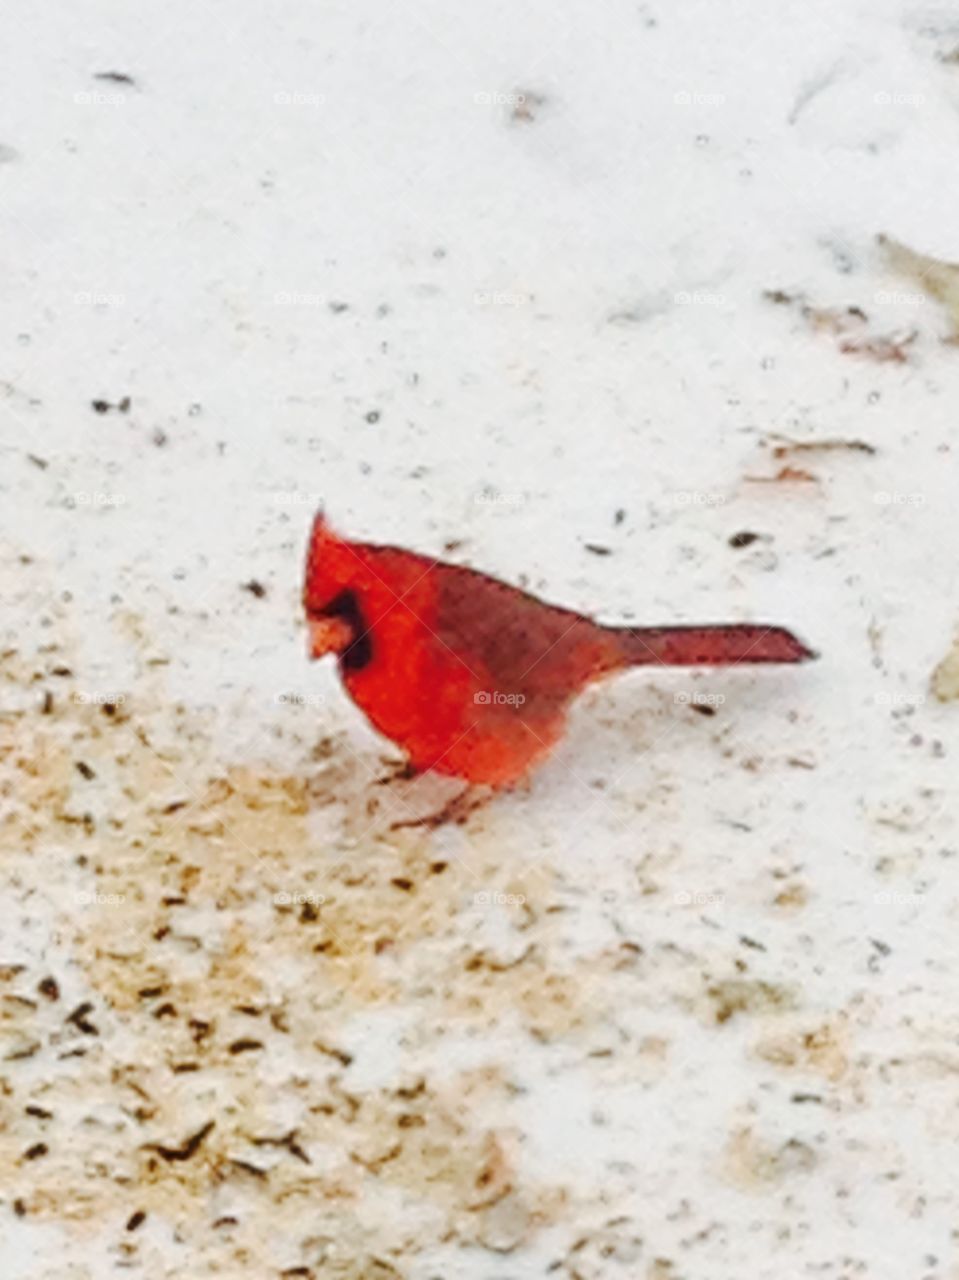 Red cardinal in snow cover garden